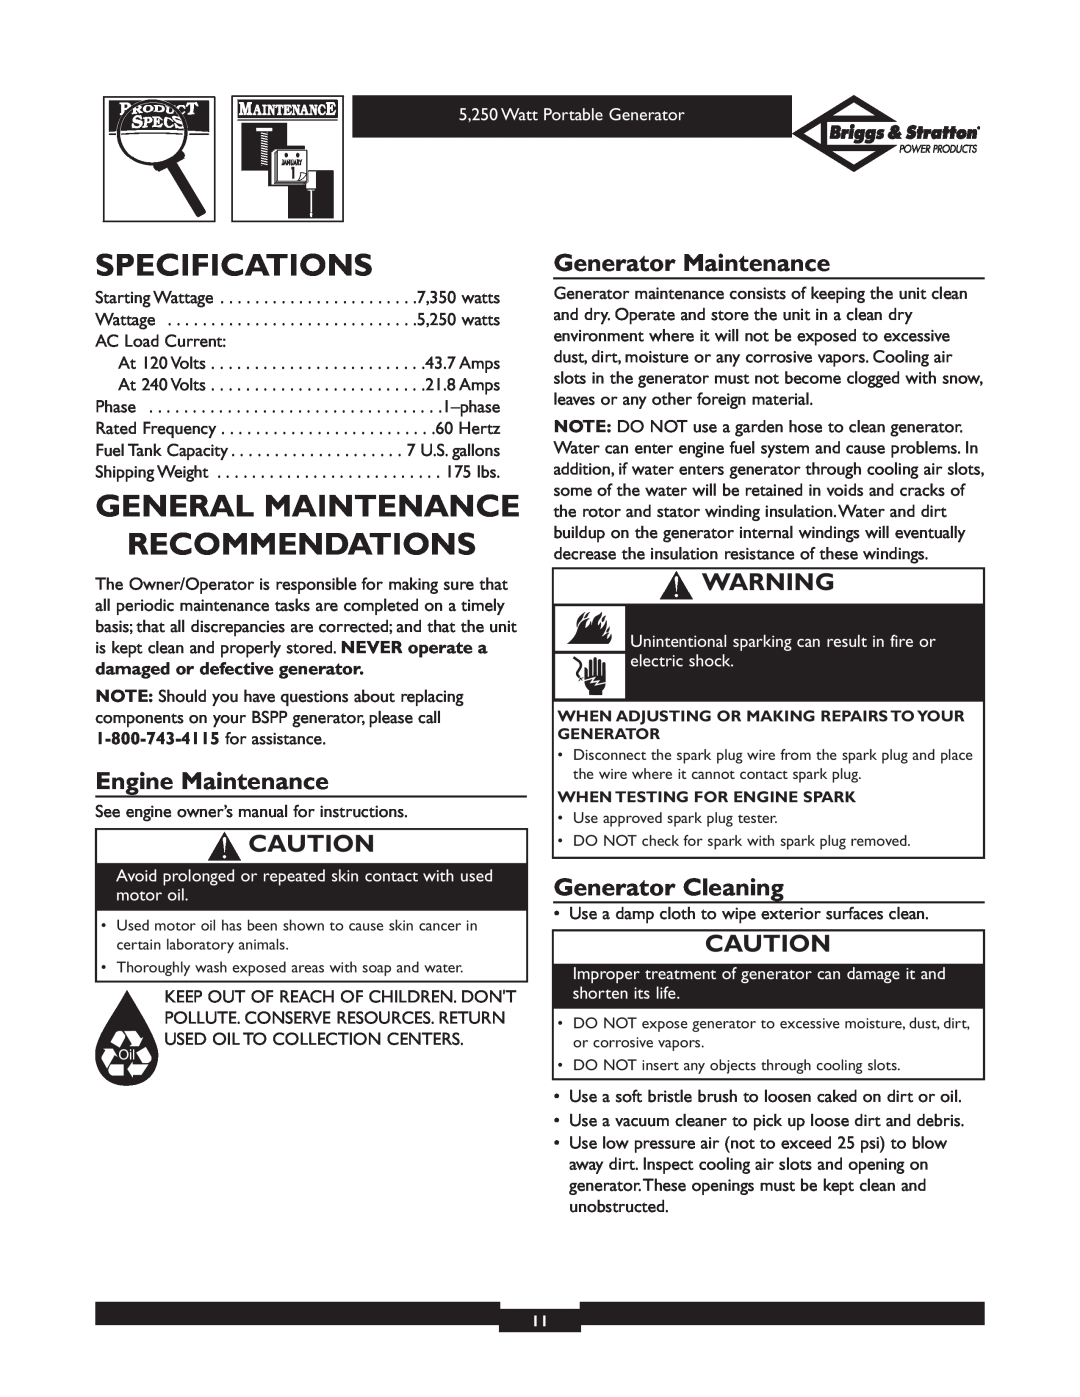 Briggs & Stratton 30204 Specifications, General Maintenance Recommendations, Engine Maintenance, Generator Maintenance 